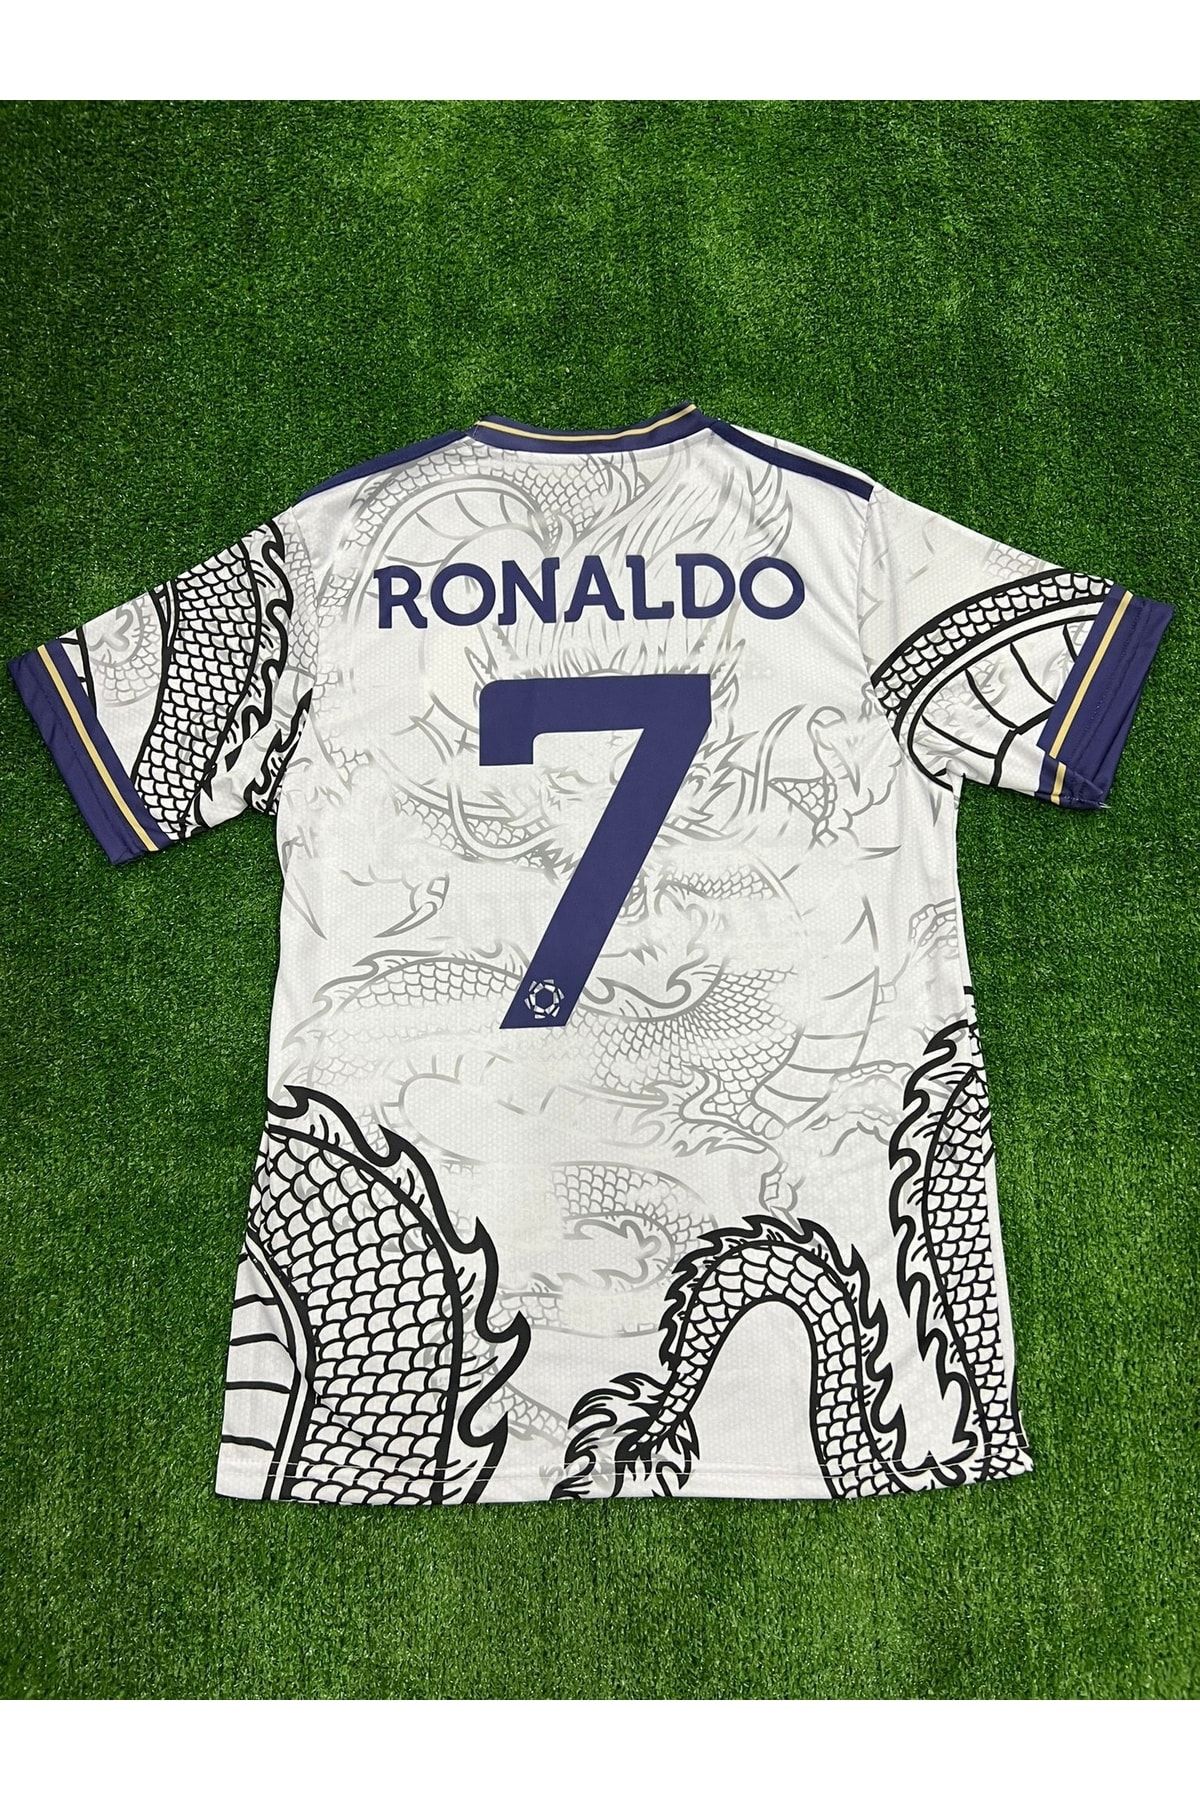 Ejder Real Madrid Ronaldo 7 Özel Tasarım Dragon Forması.